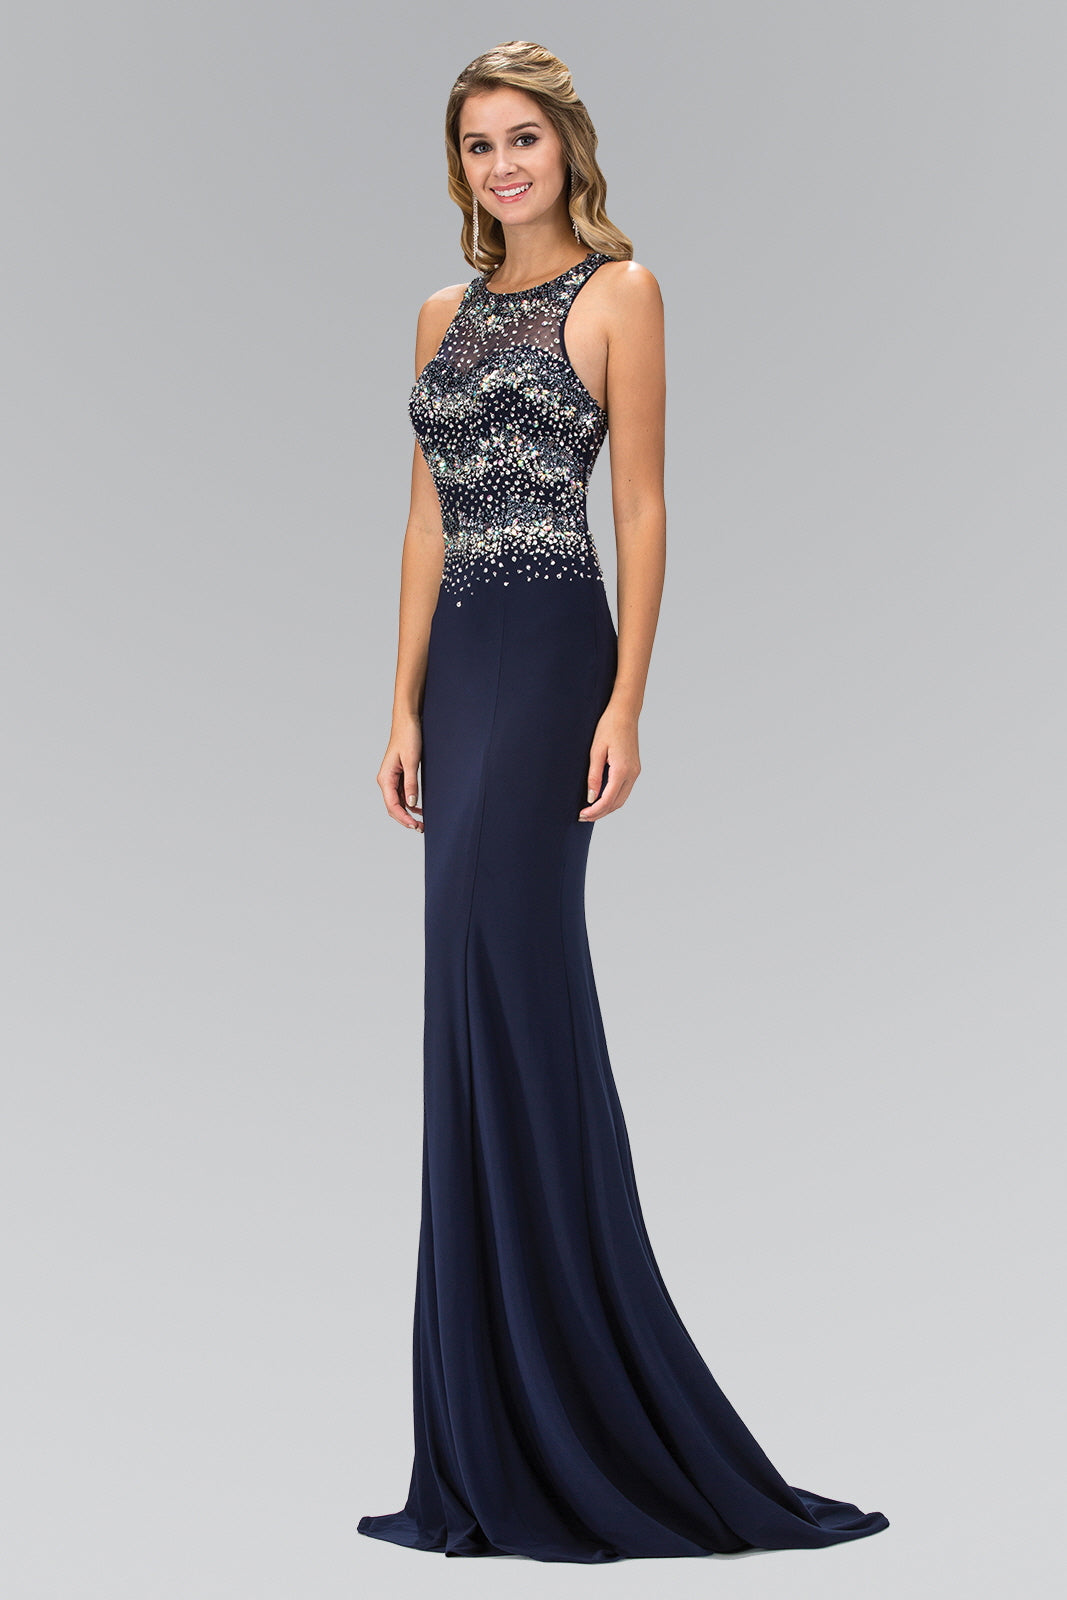 Jewel Embellished Open Back Floor Length Dress GLGL1361 Elsy Style PROM